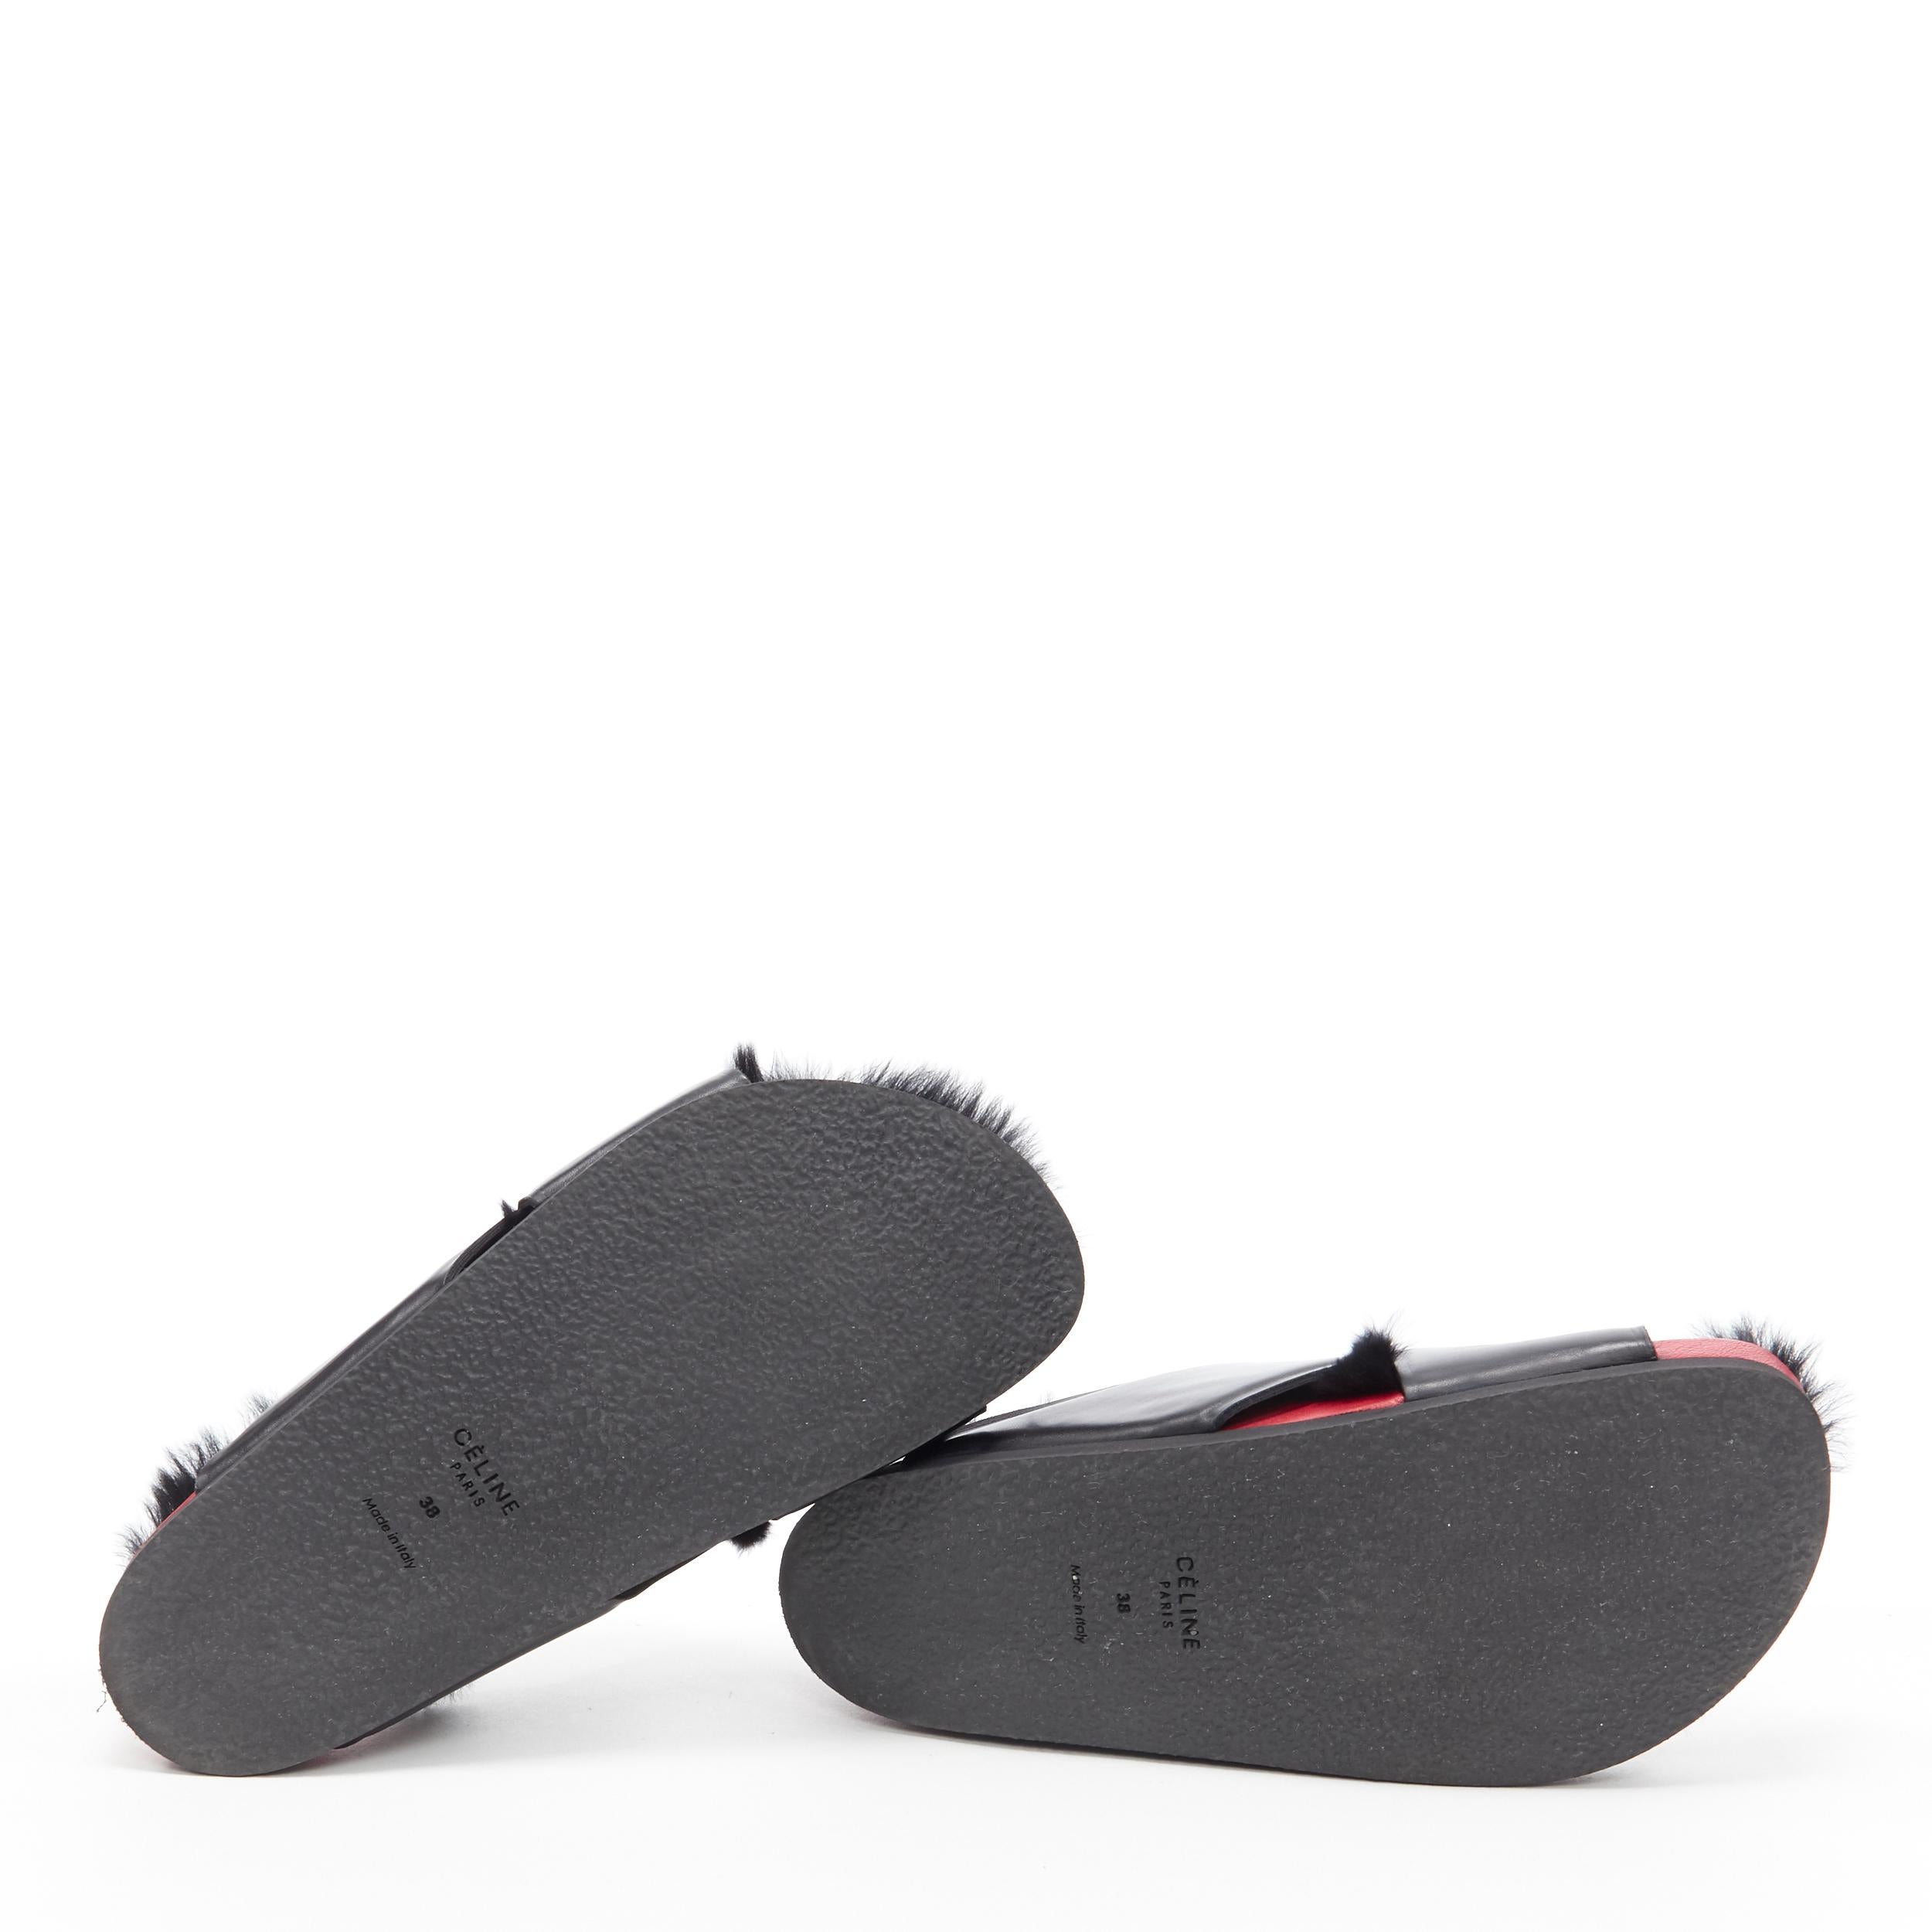 Black new OLD CELINE PHOEBE PHILO red white leather Twist Boxy slides sandals EU37